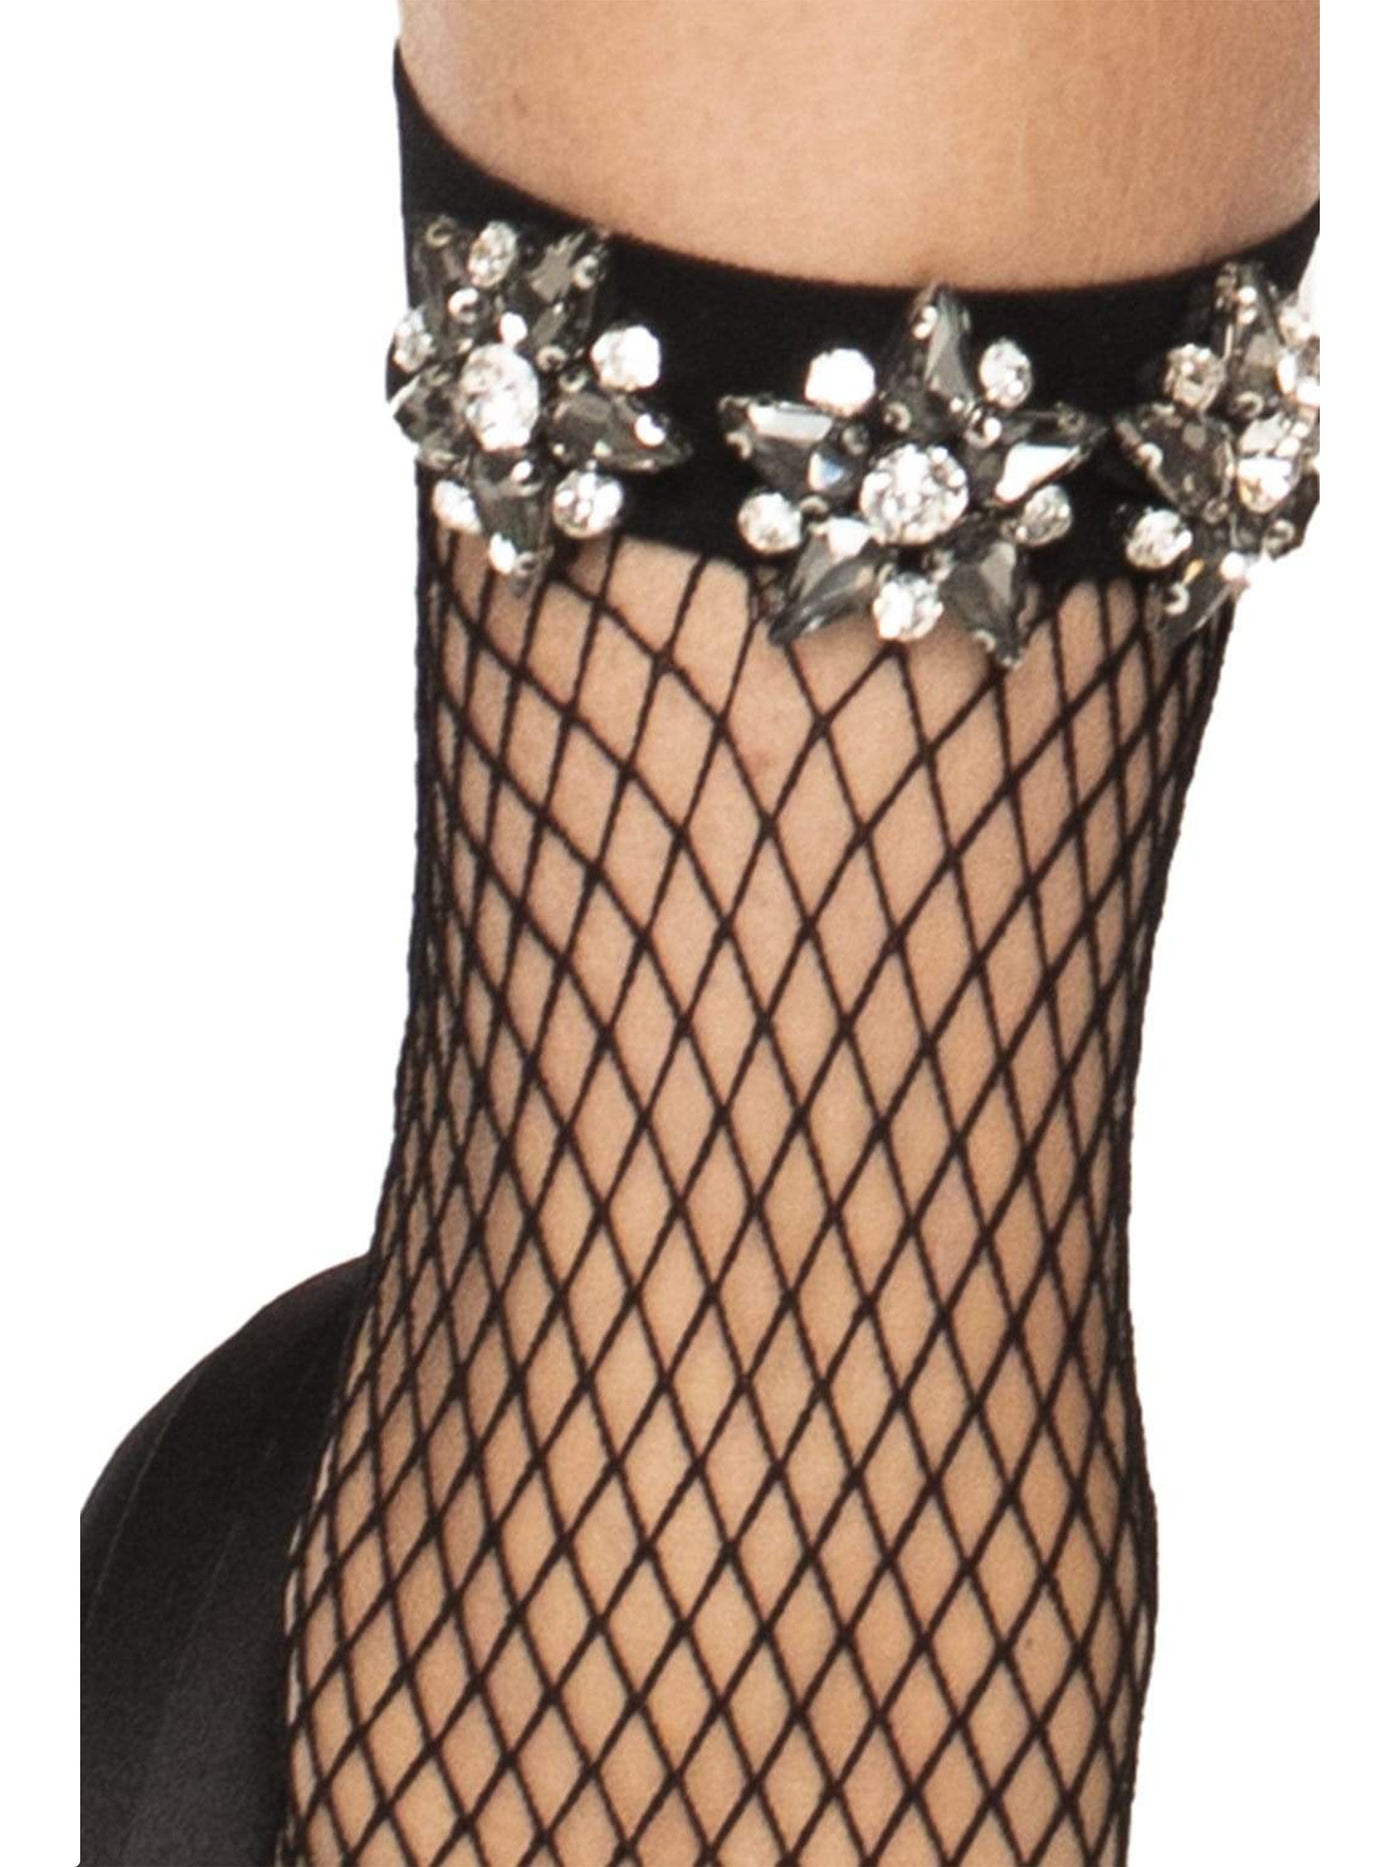 Bejeweled Fishnet Anklet Socks with Rhinestone Flower Jewellery